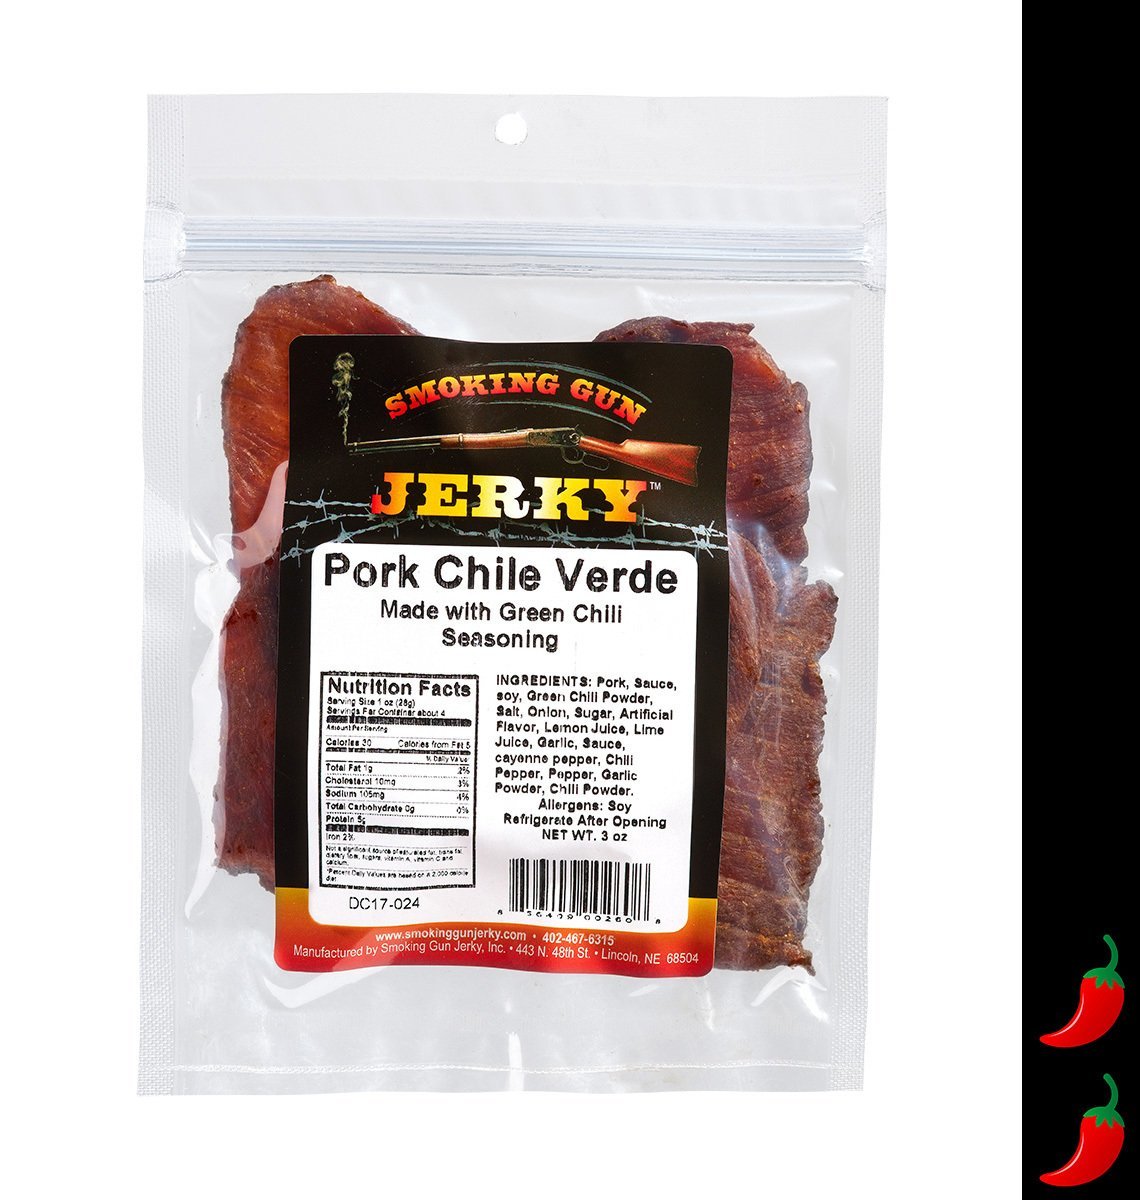 Pork Chile Verde Jerky, 2.1oz. Pkg.